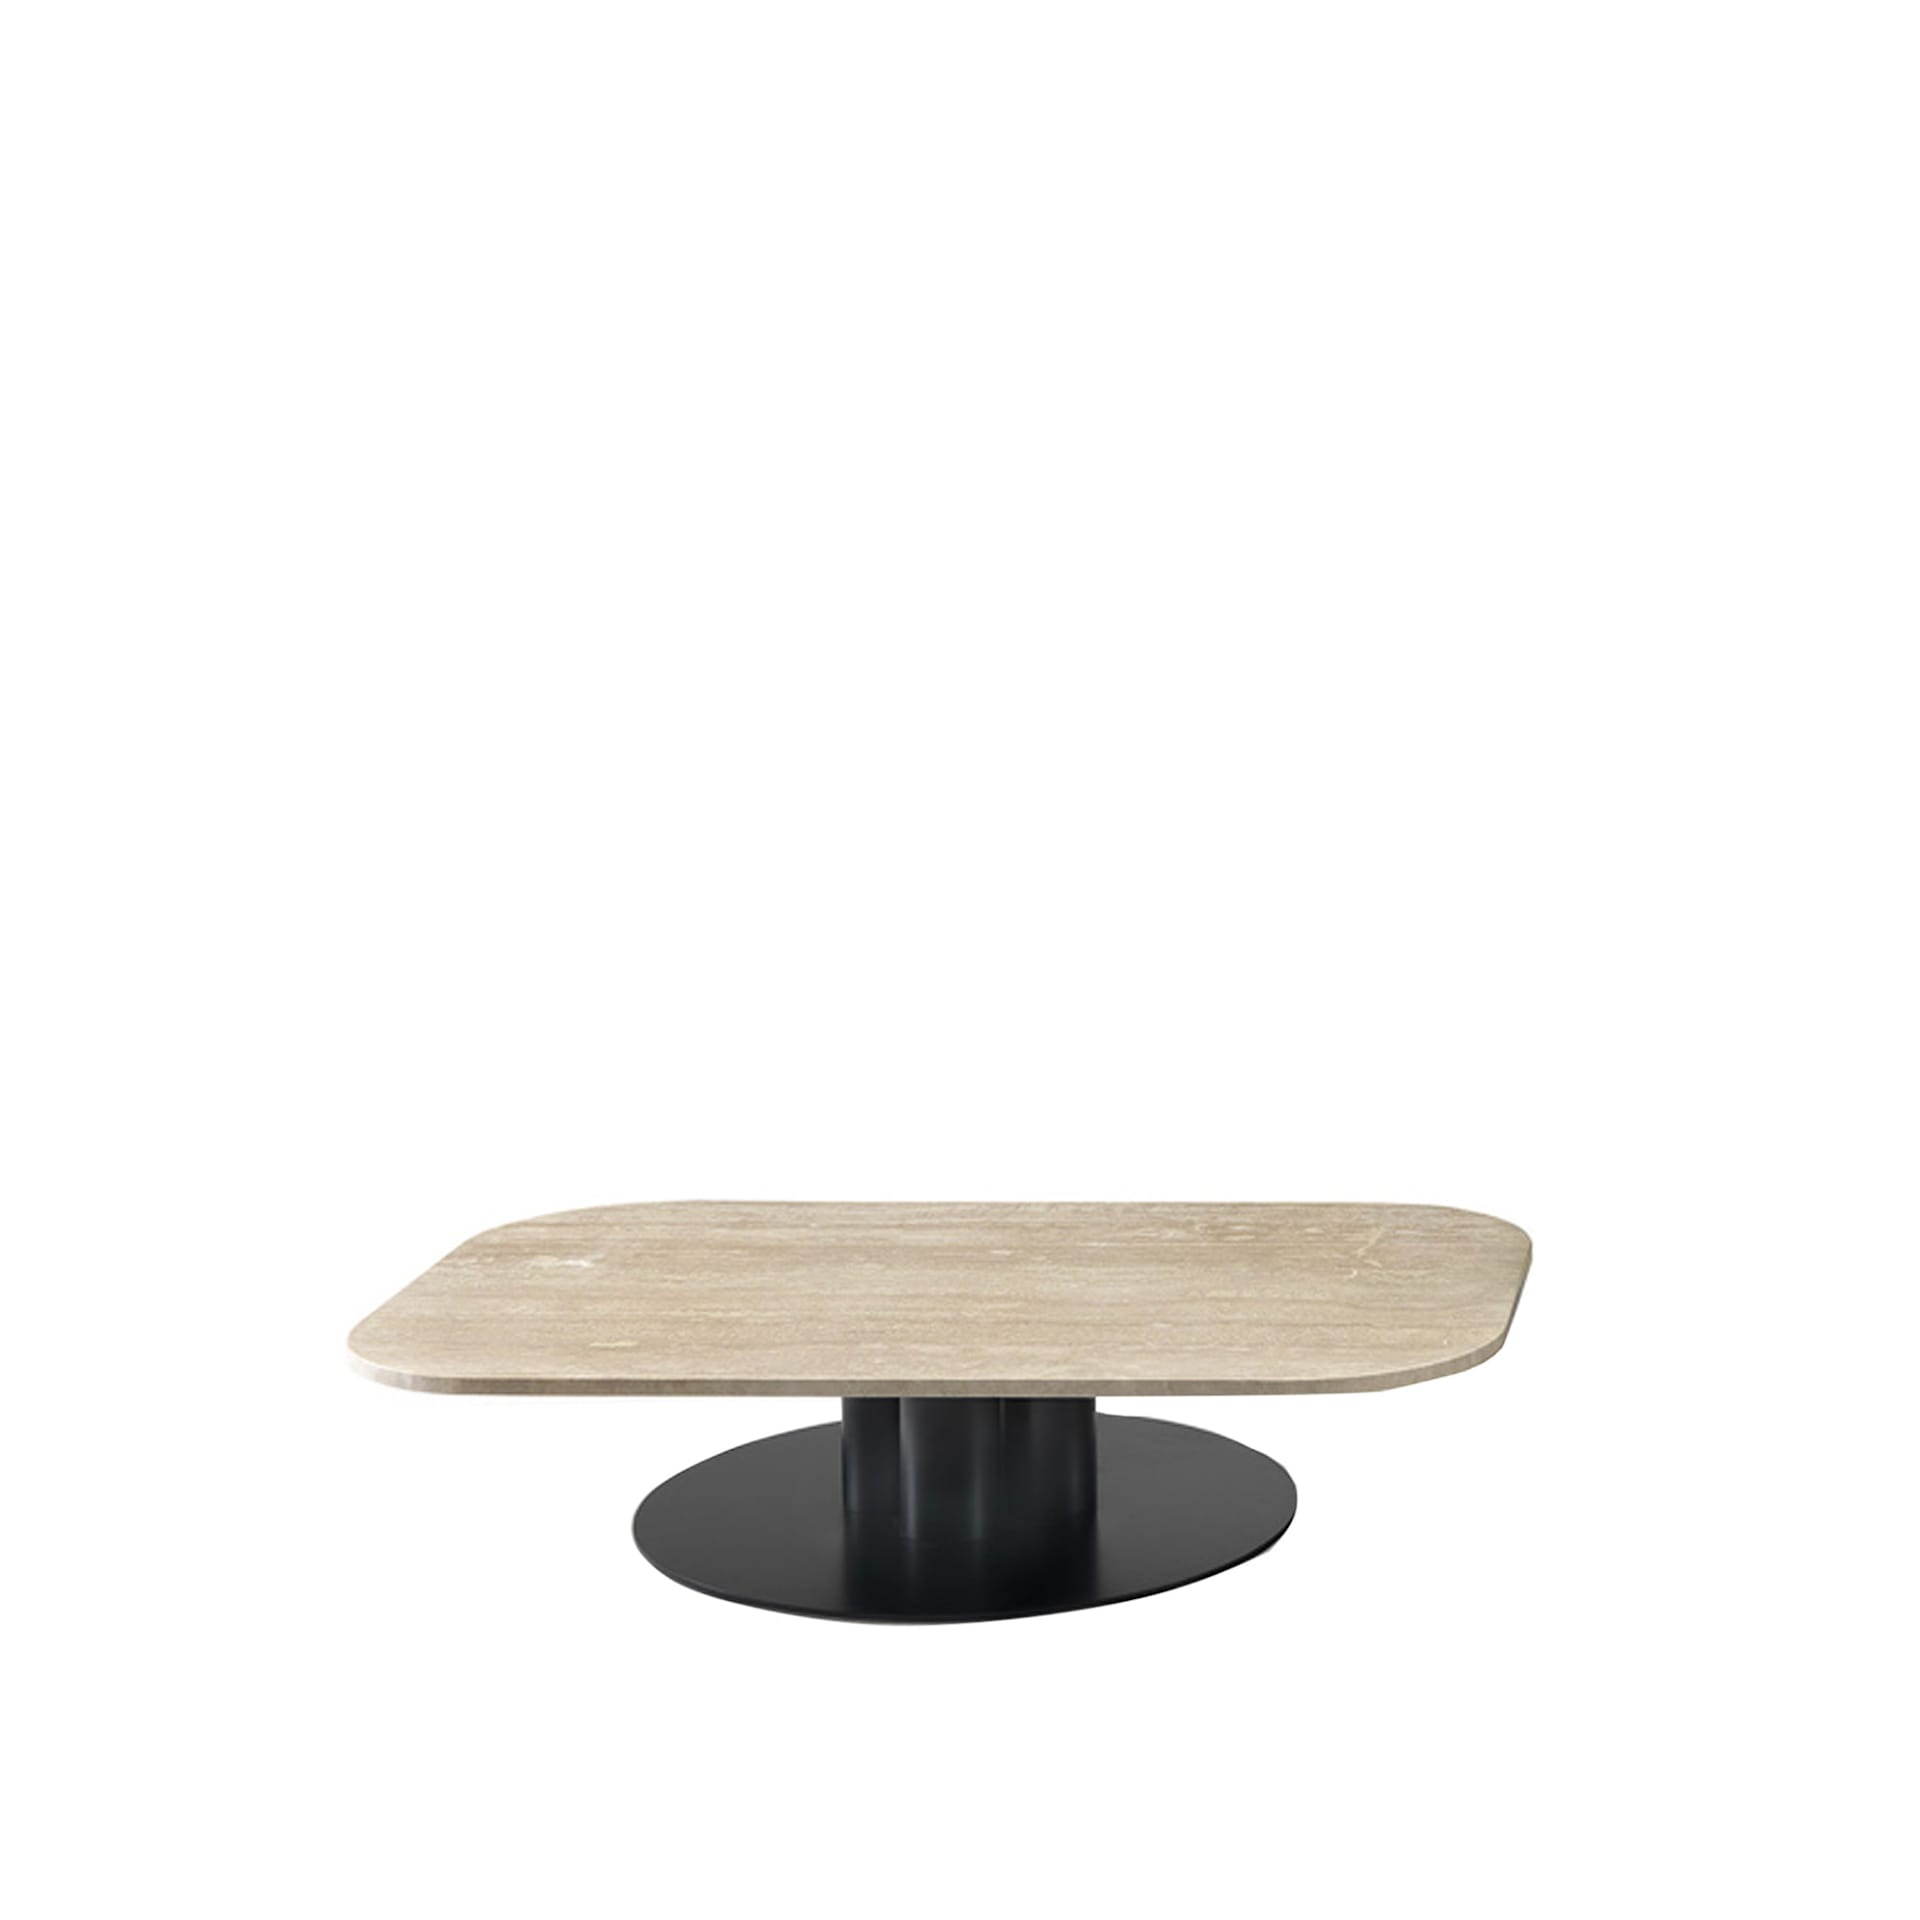 Goya Small Table 70 x 120 cm - Travertino Romano - Arflex - NO GA